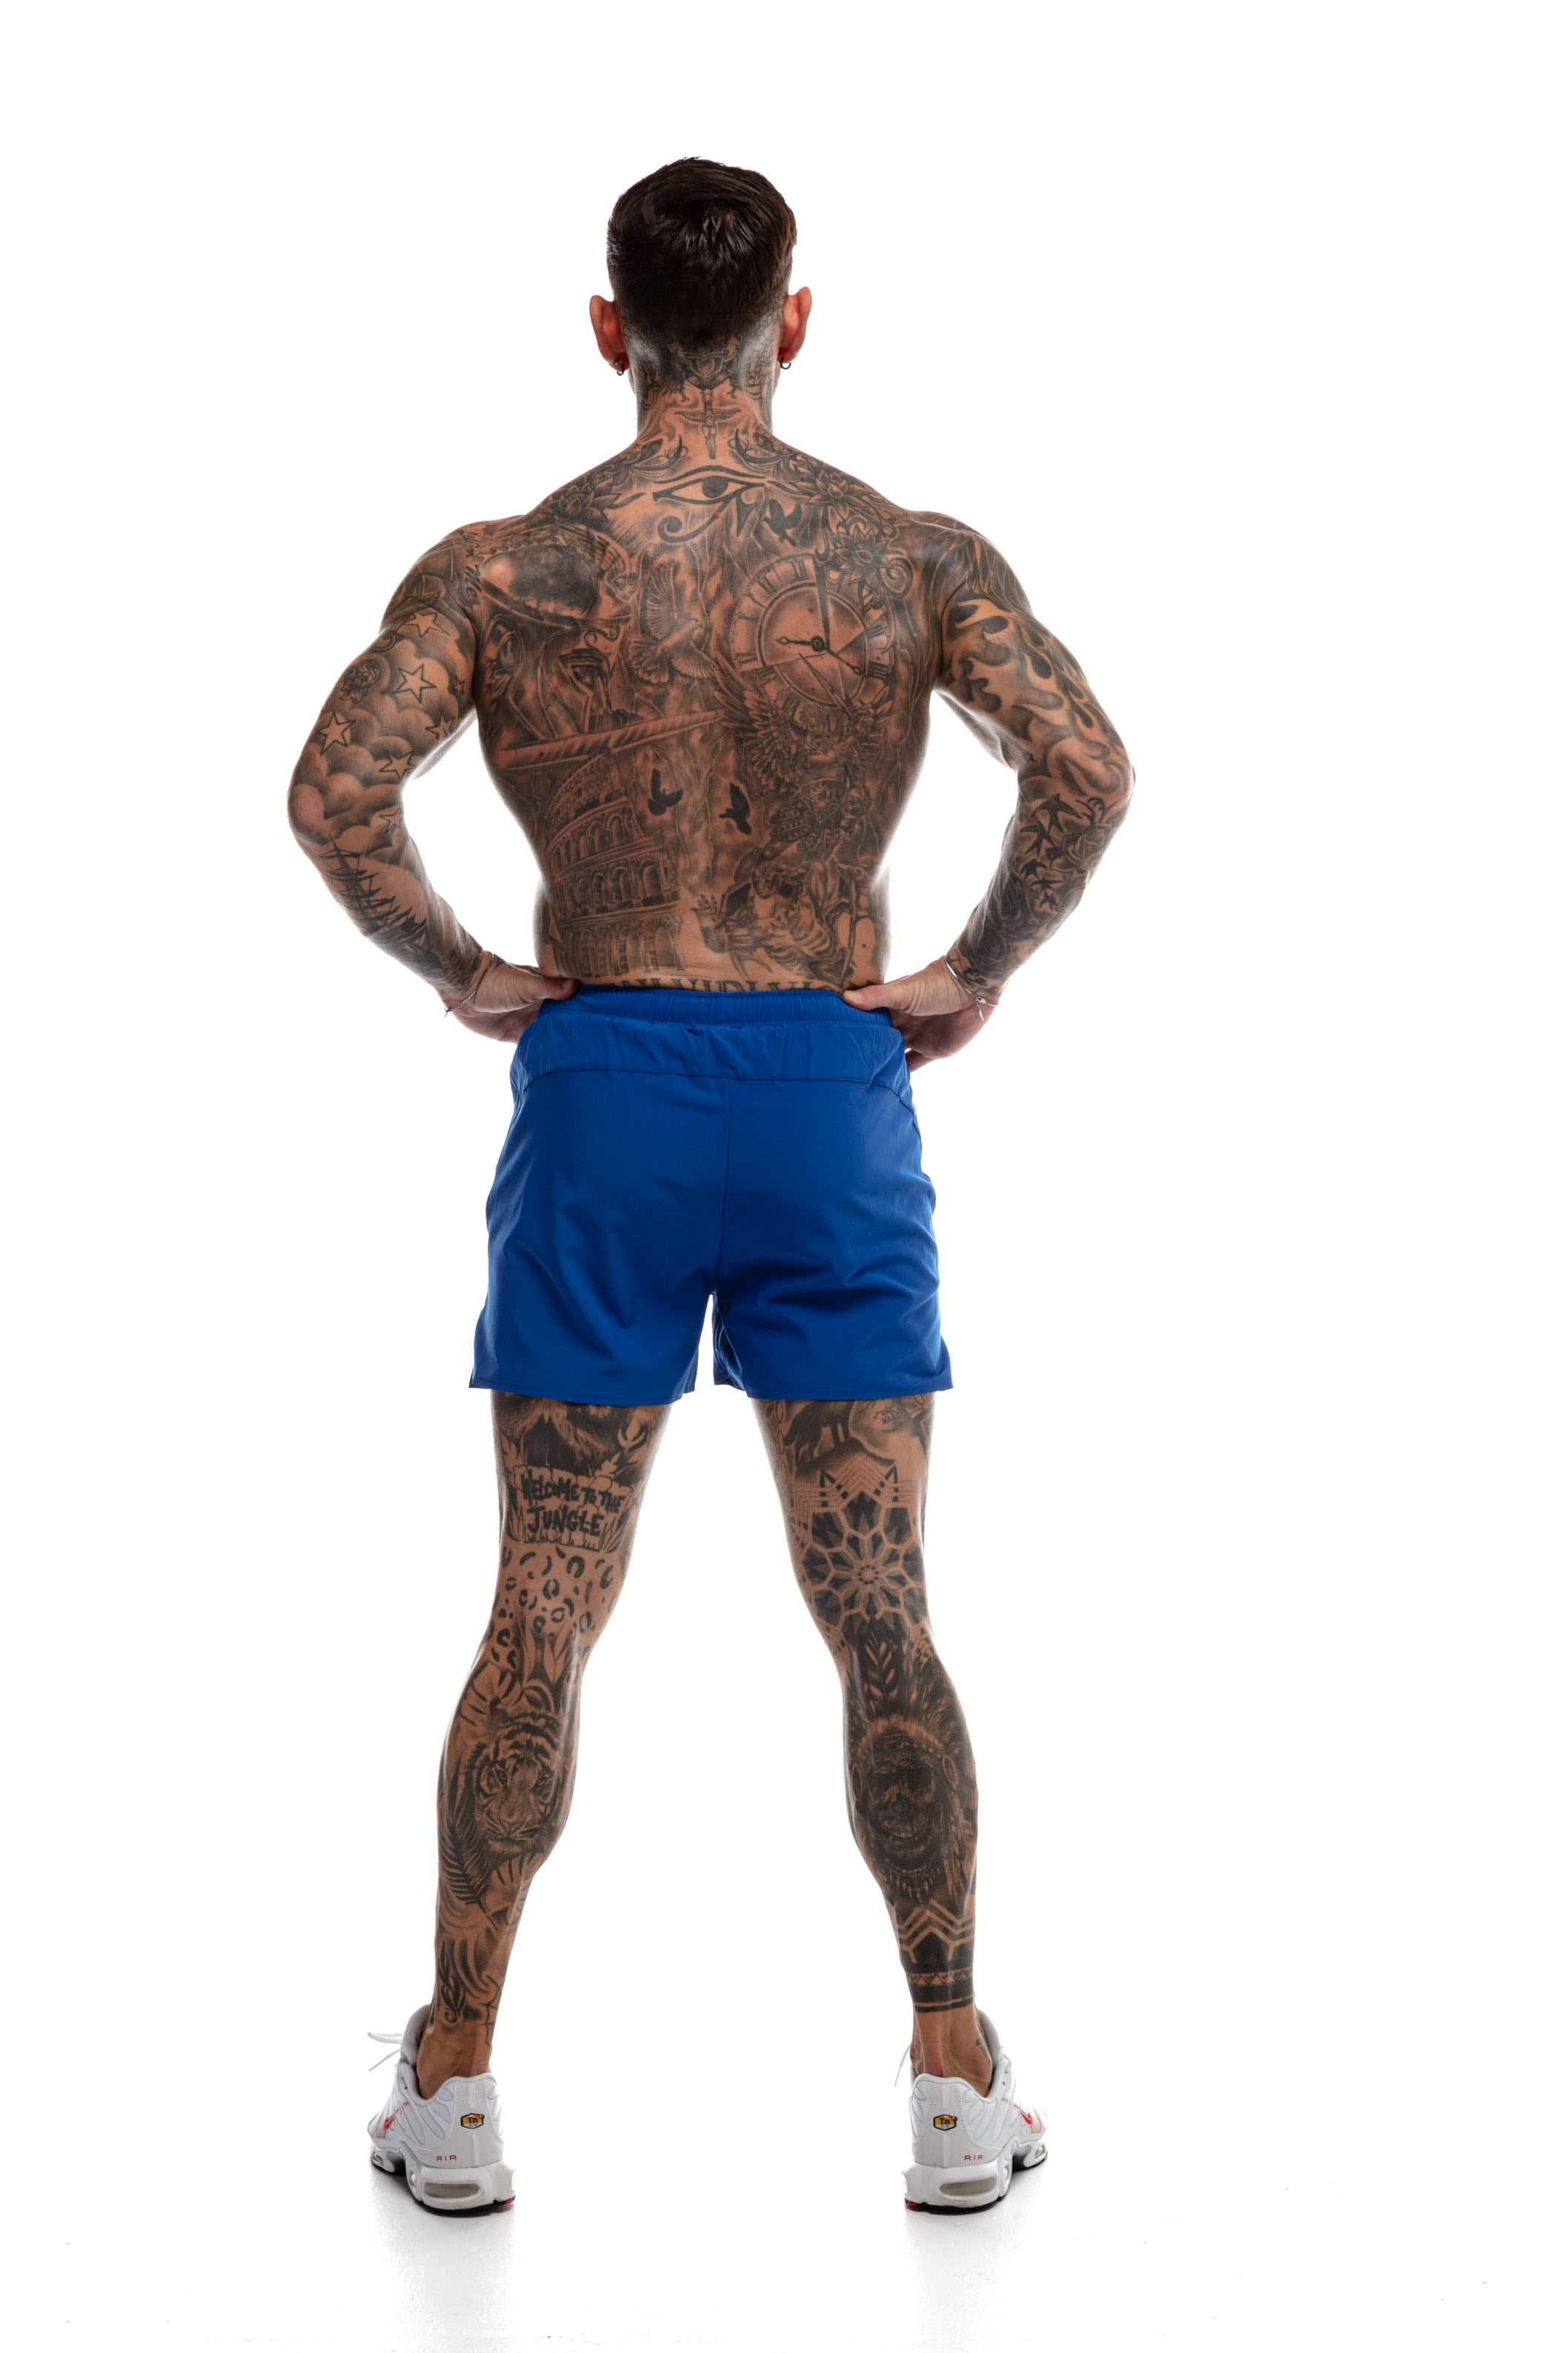 GymFreak Mens Fusion Shorts - Royal Blue - 3.5 inch